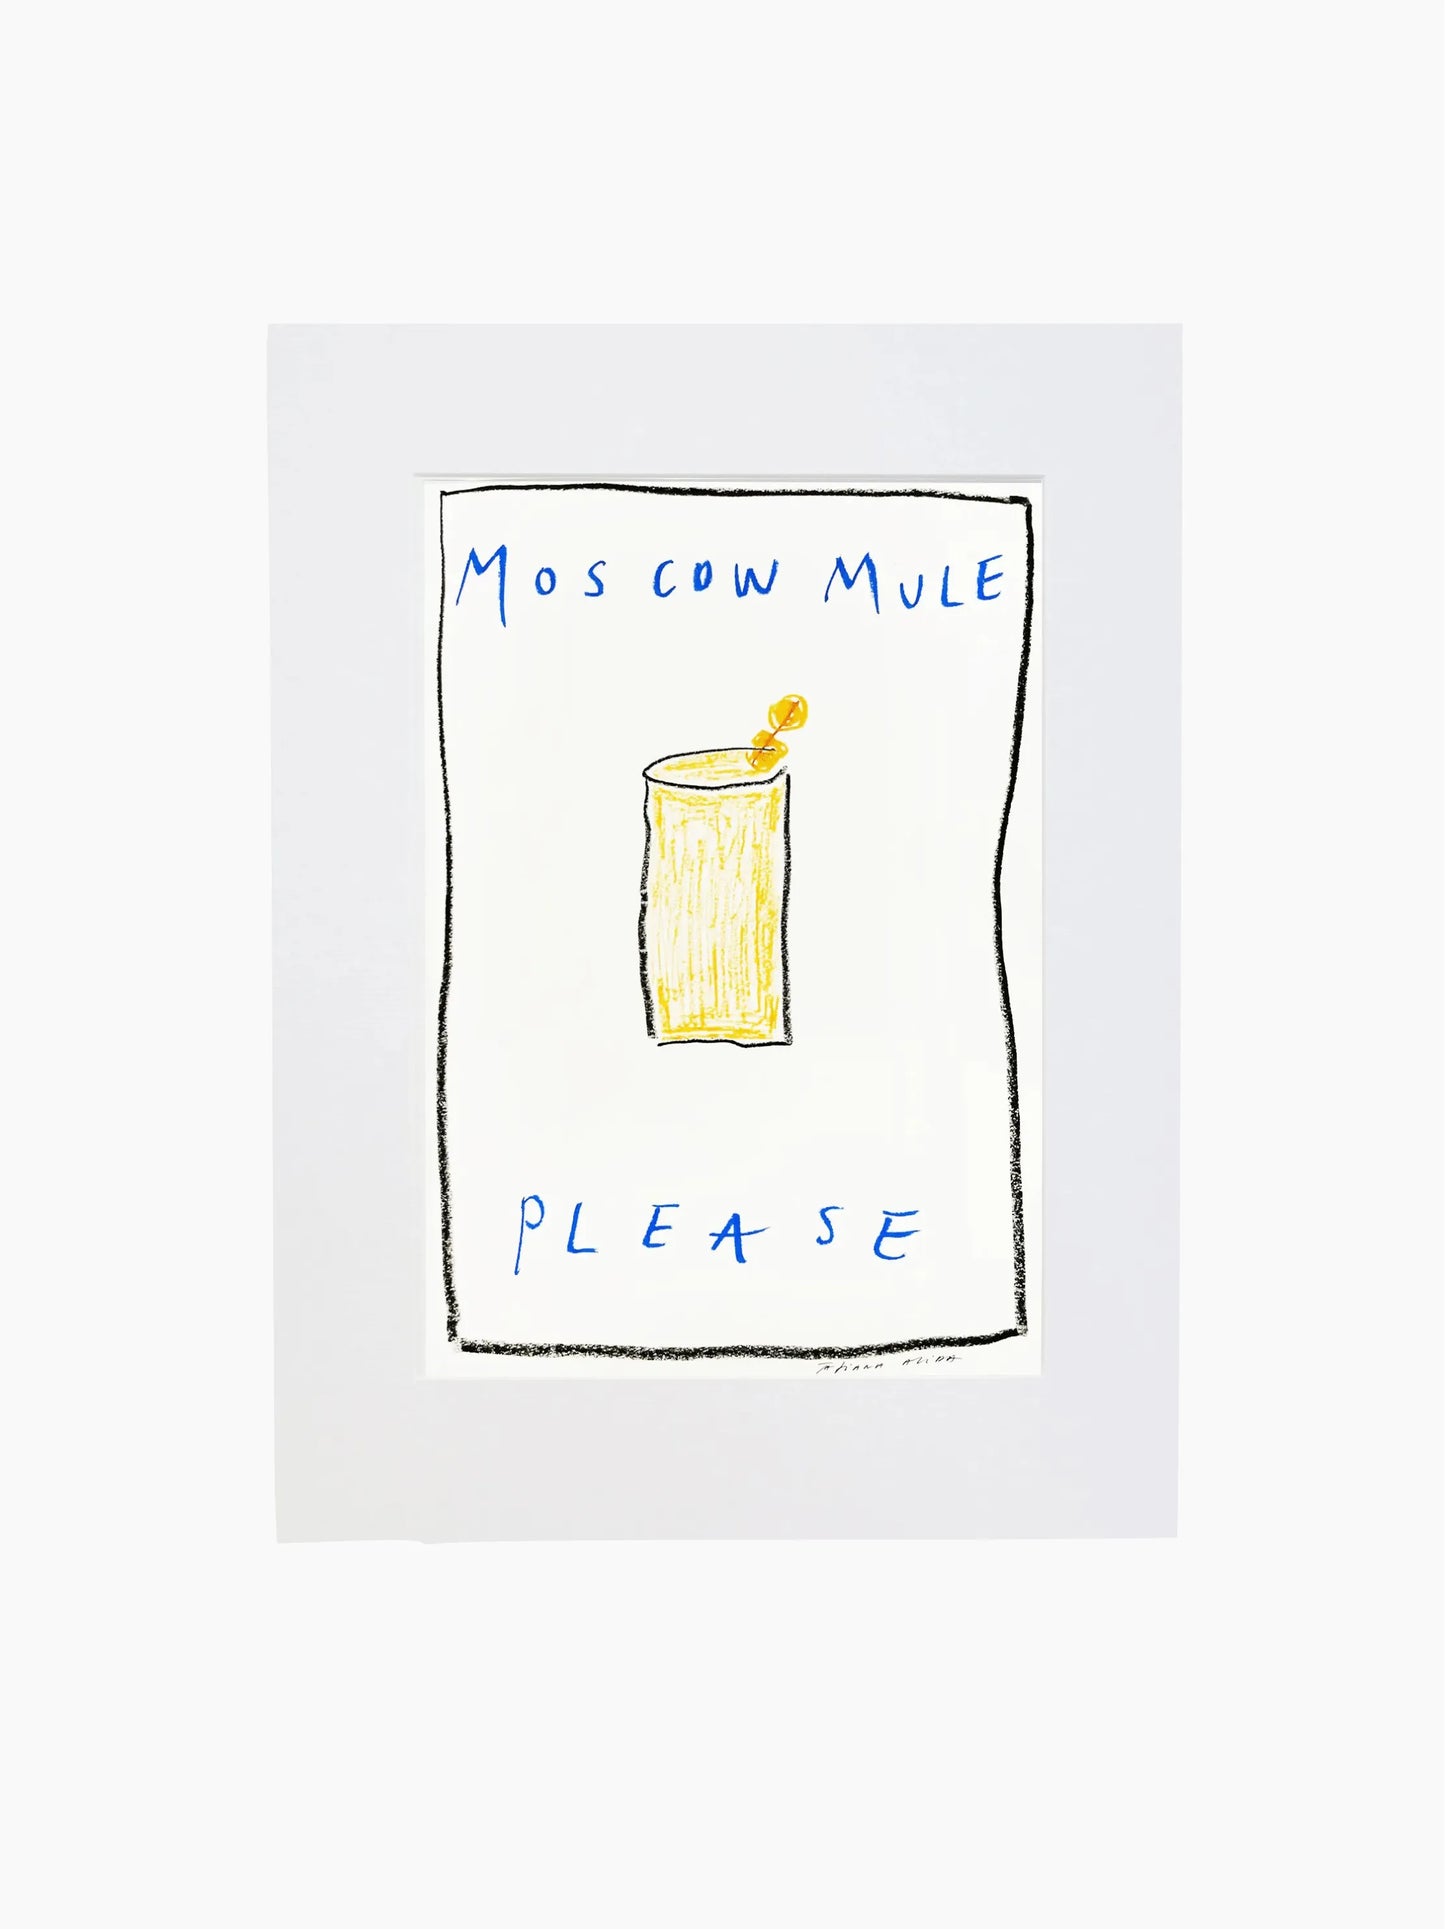 Moscow Mule Please Art Print